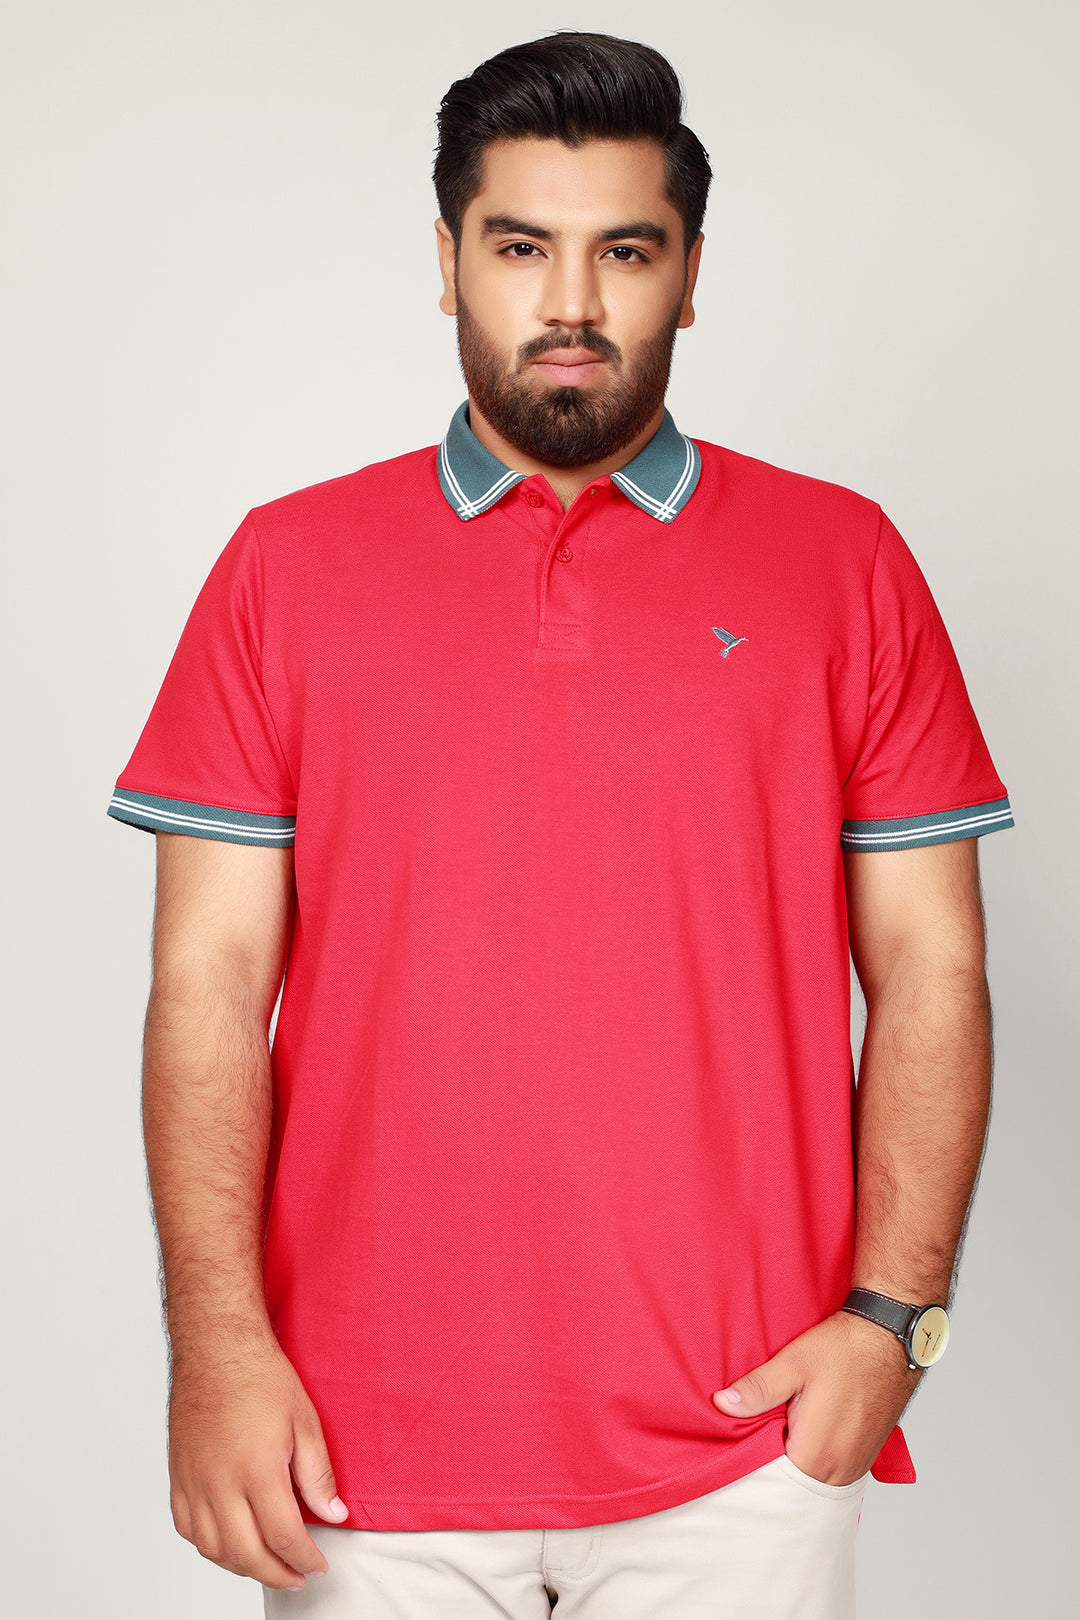 Best Plus Size Polo Shirt in Pakistan